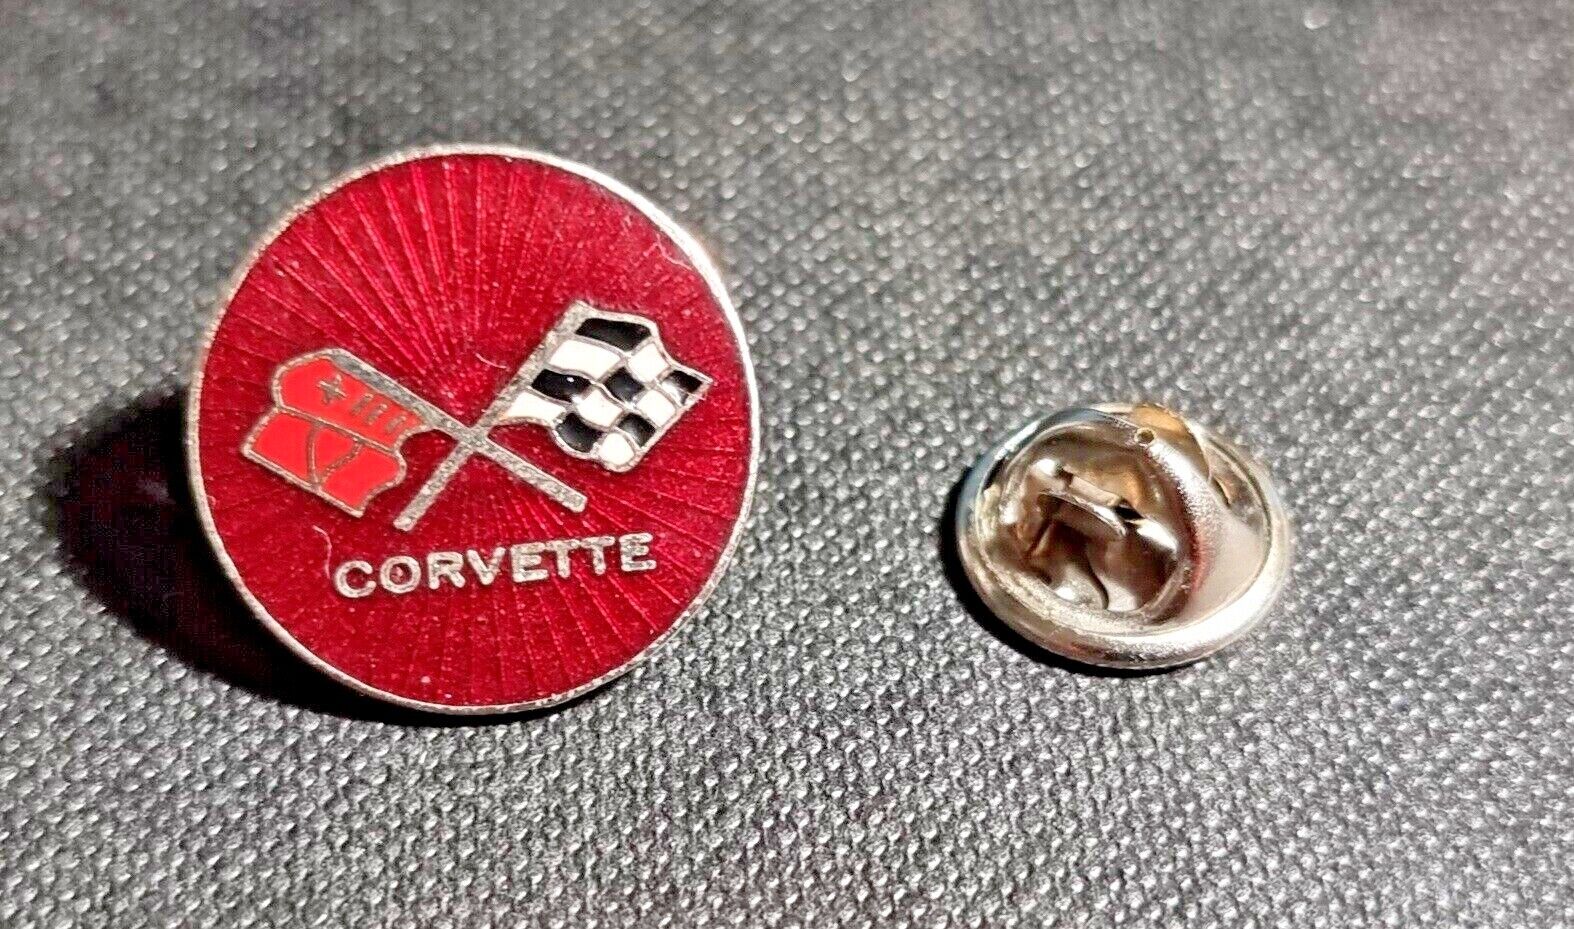 Chevrolet Corvette Pin Logo 1963-1982 Red Silver Enameled - Dimensions 0 25/32in